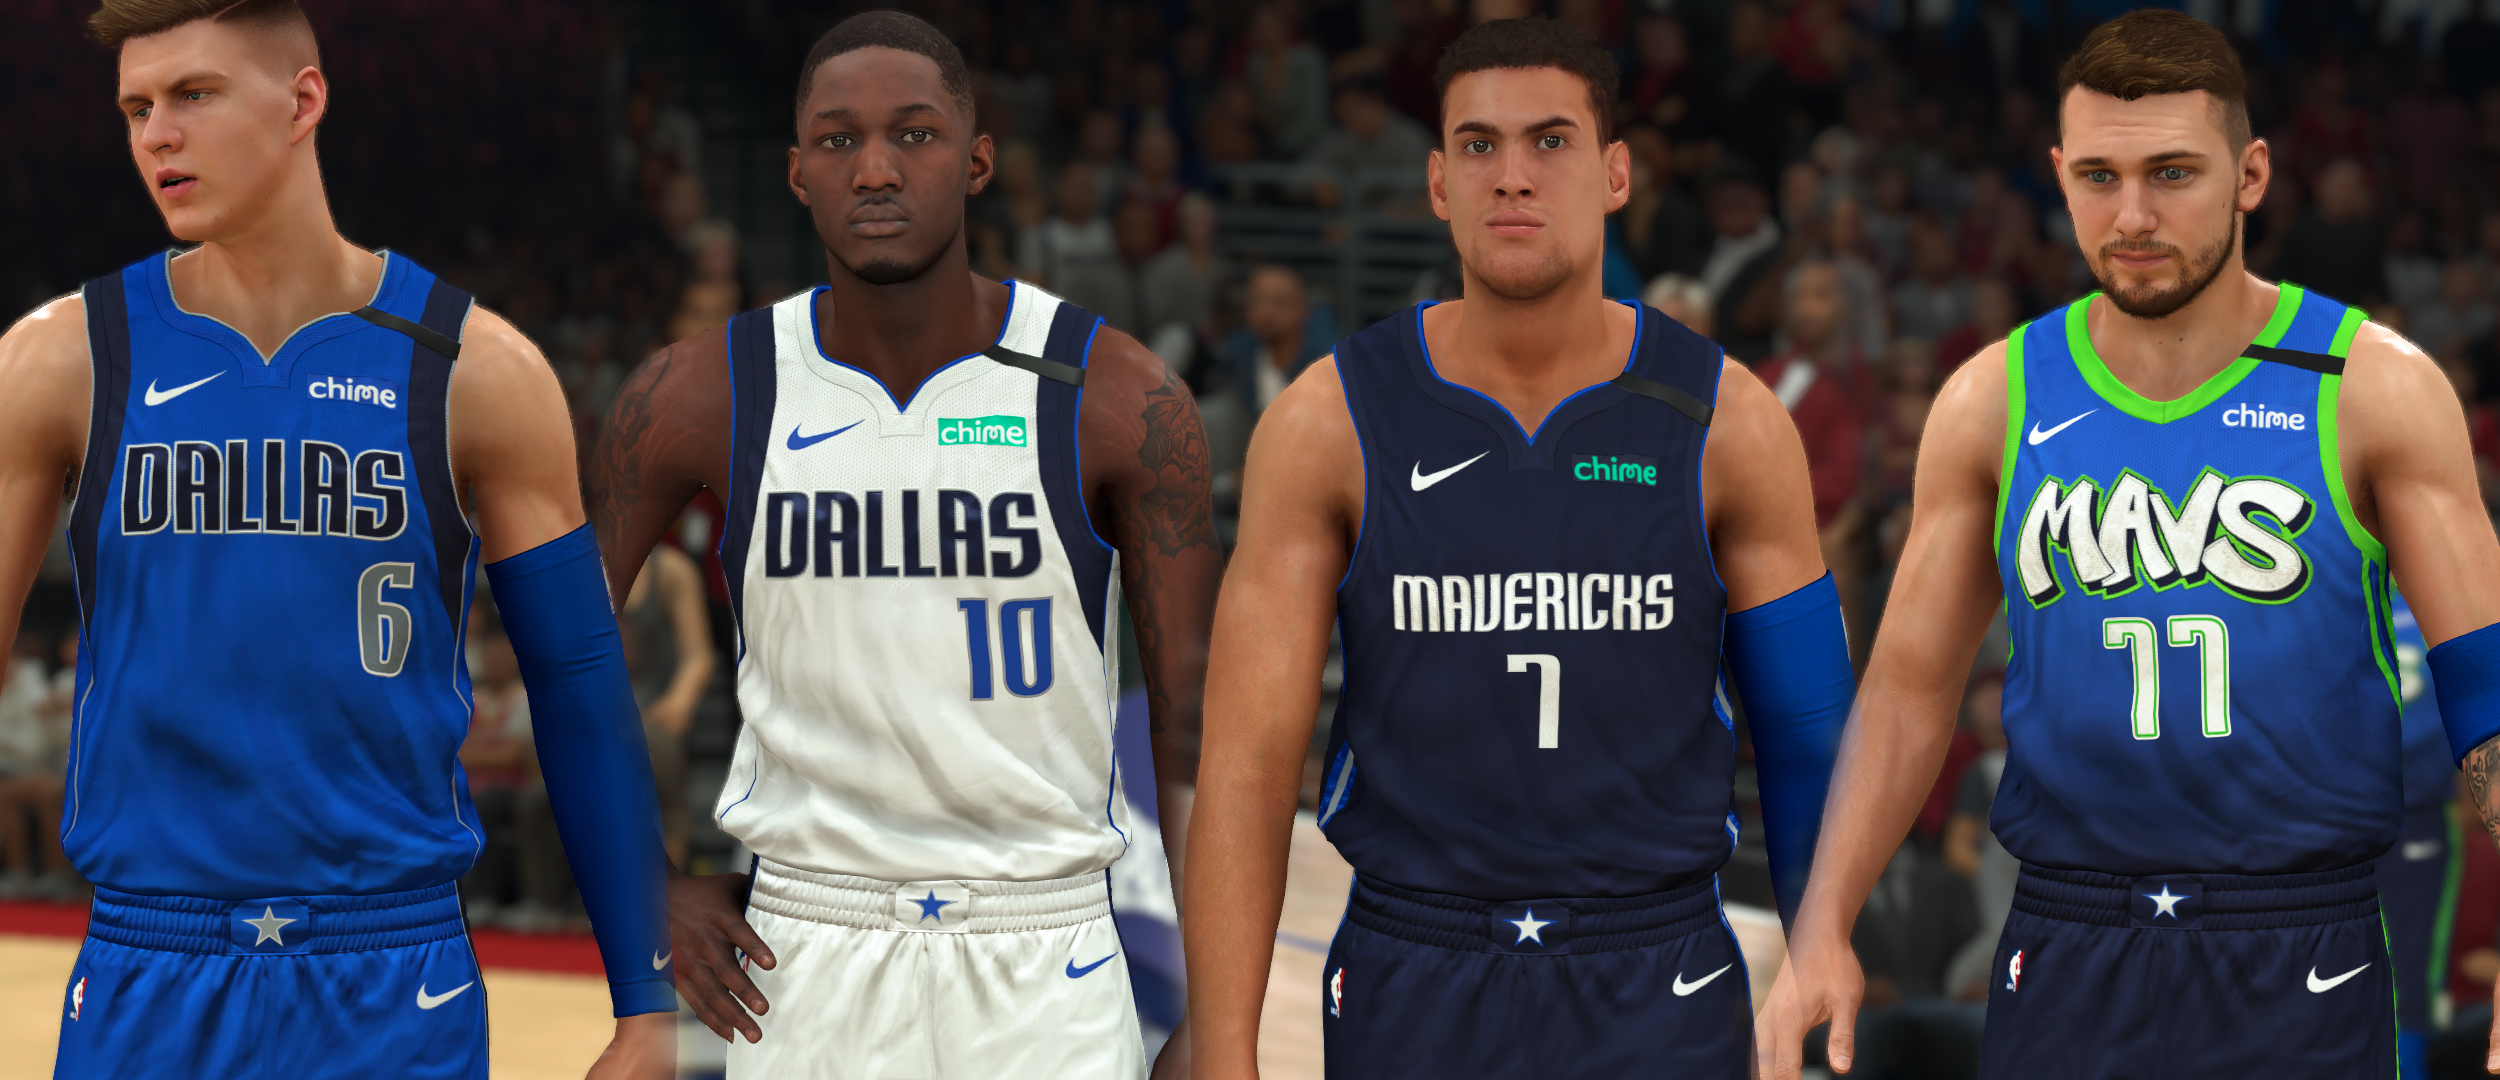 Mavs Tracker on X: Dallas Mavericks 2021-2022 Uniform Breakdown